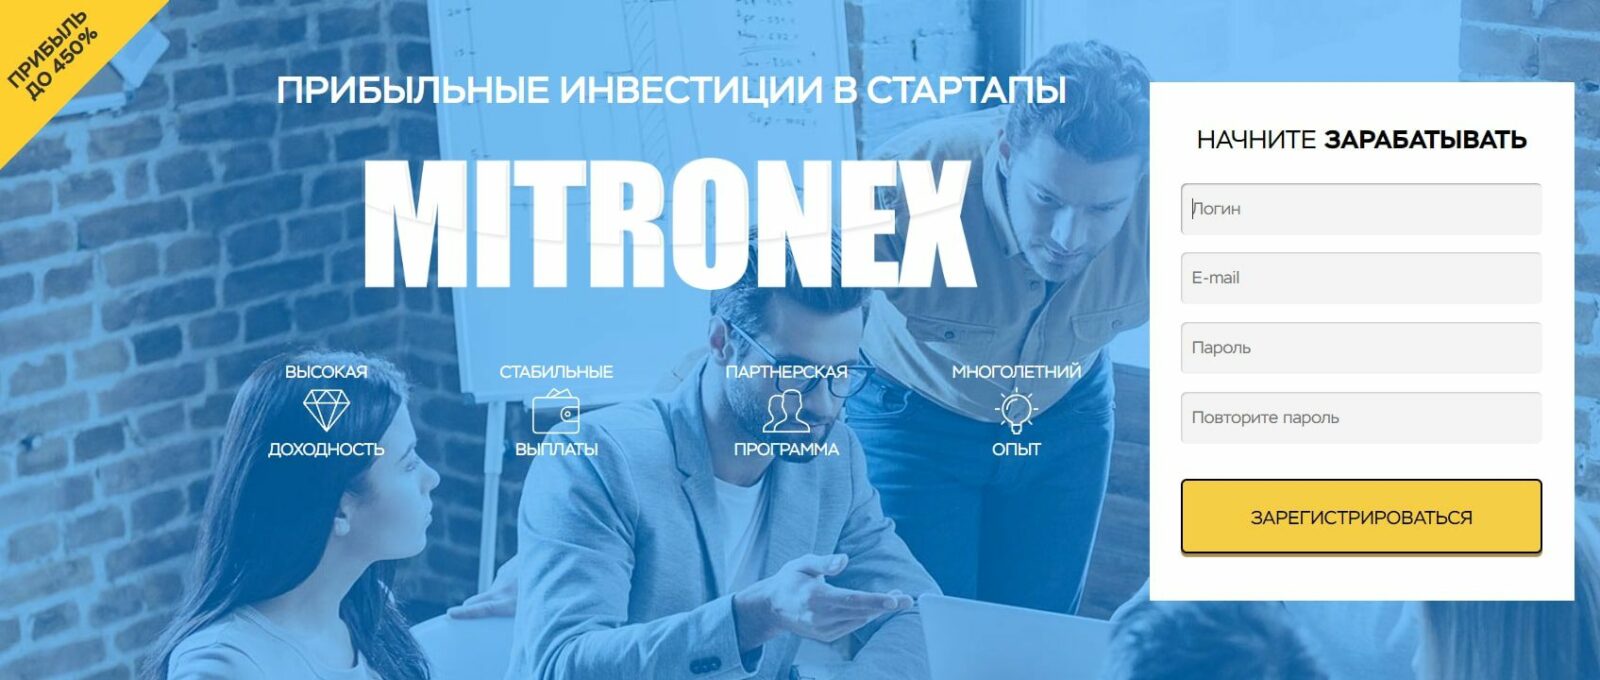 Mitronex com сайт